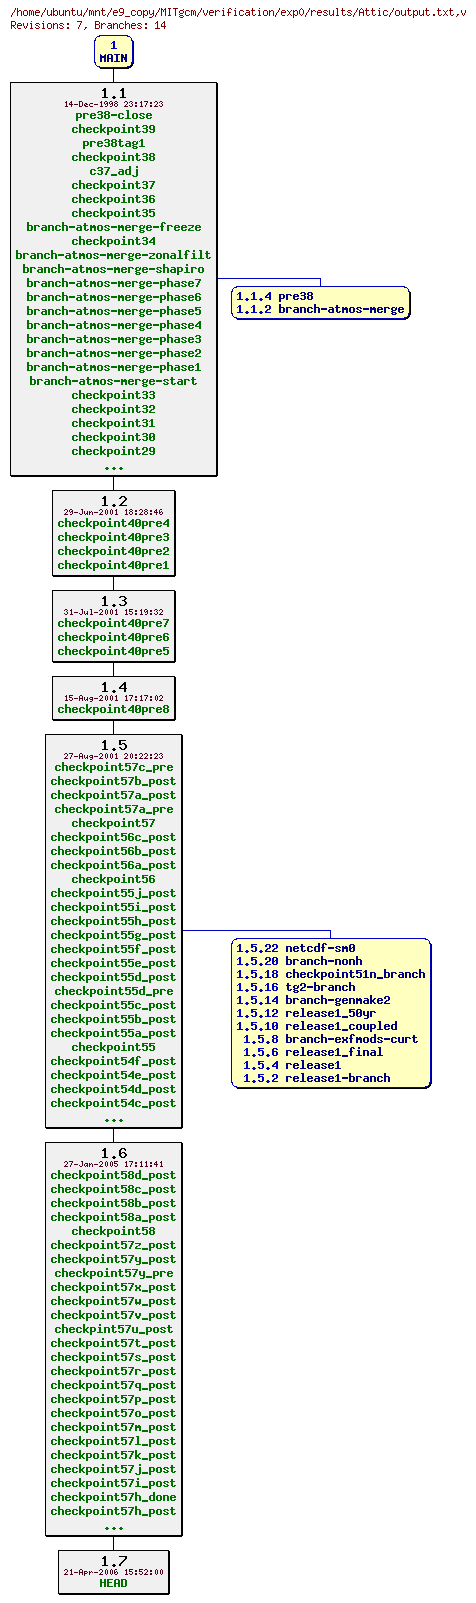 Revisions of MITgcm/verification/exp0/results/output.txt